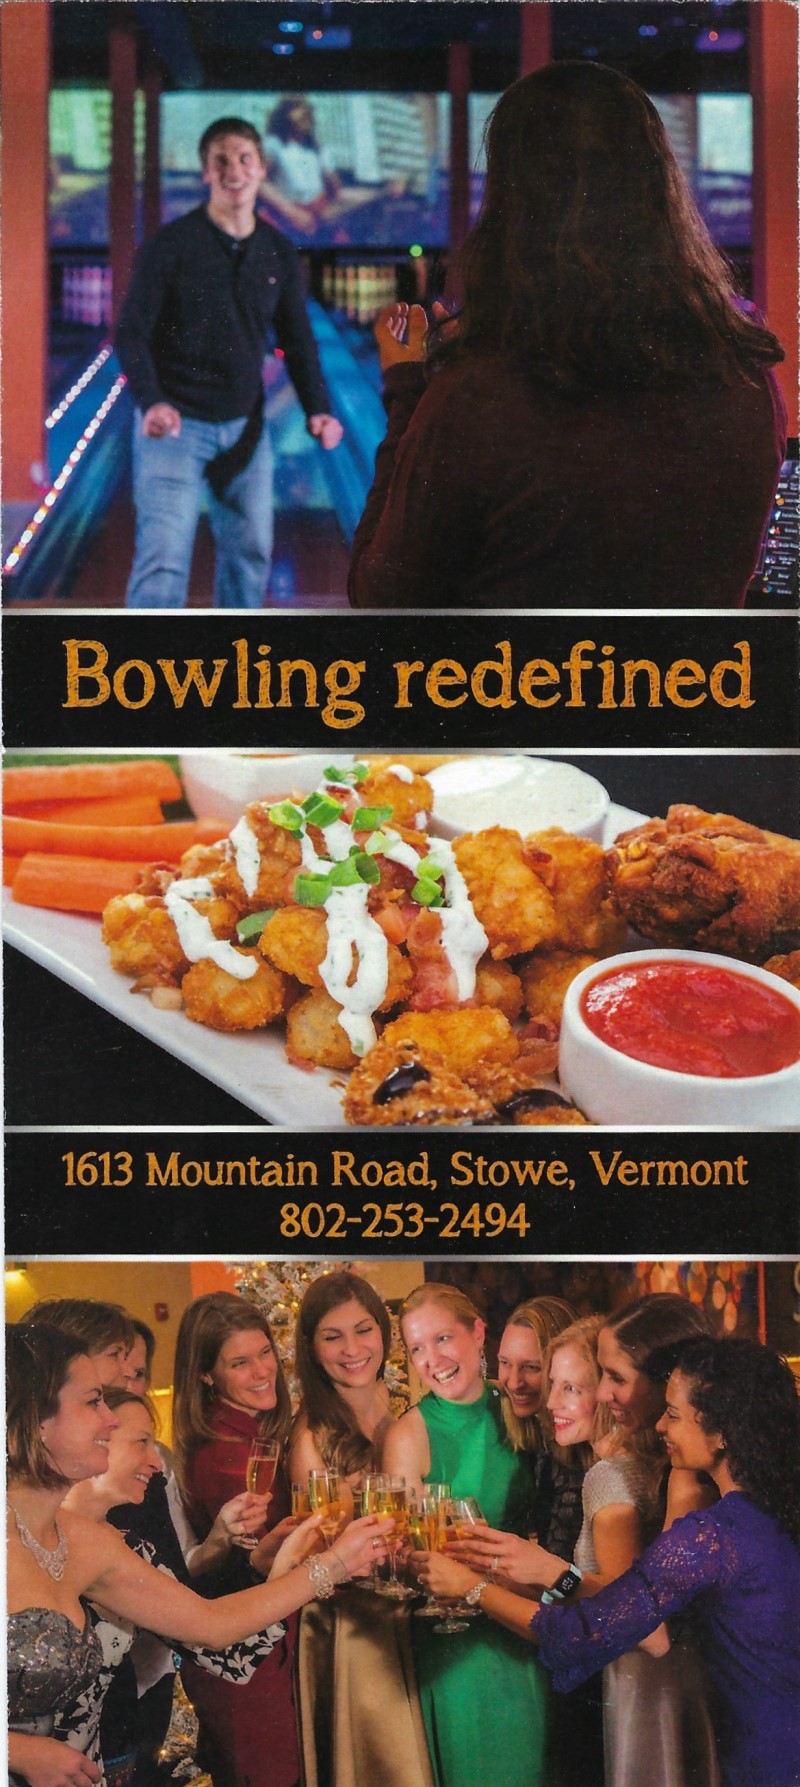 Stowe Bowl brochure thumbnail